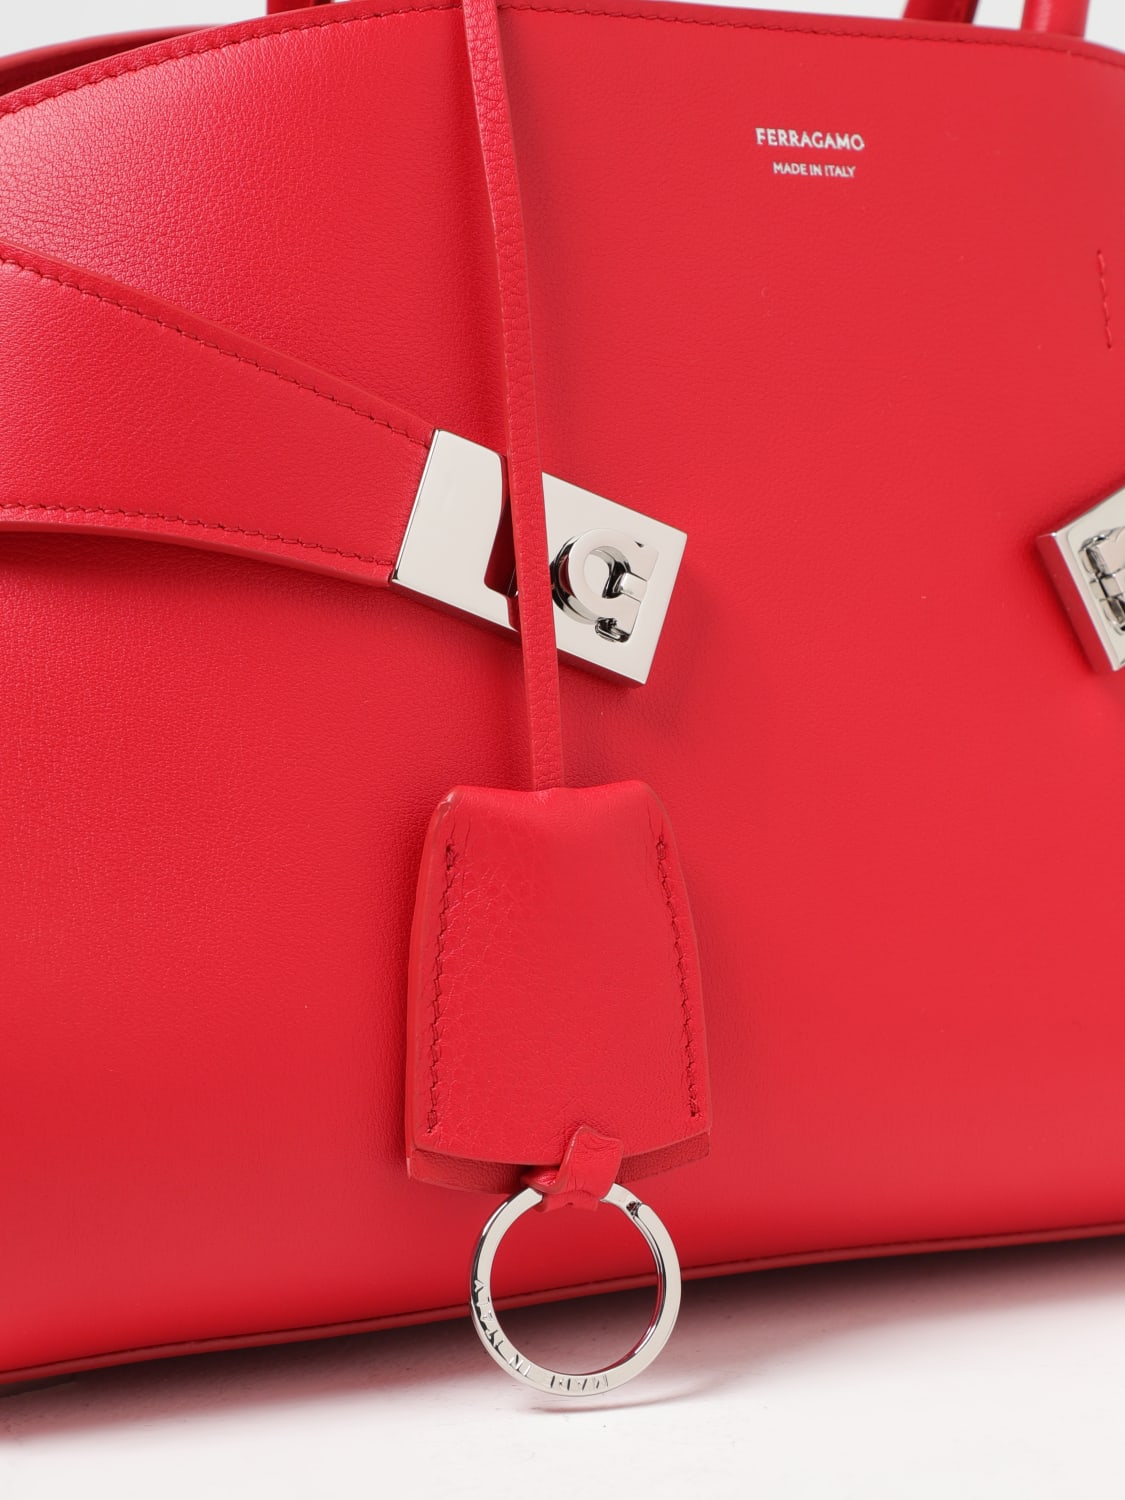 FERRAGAMO: Hug bag in natural grain leather - Red | Ferragamo handbag ...